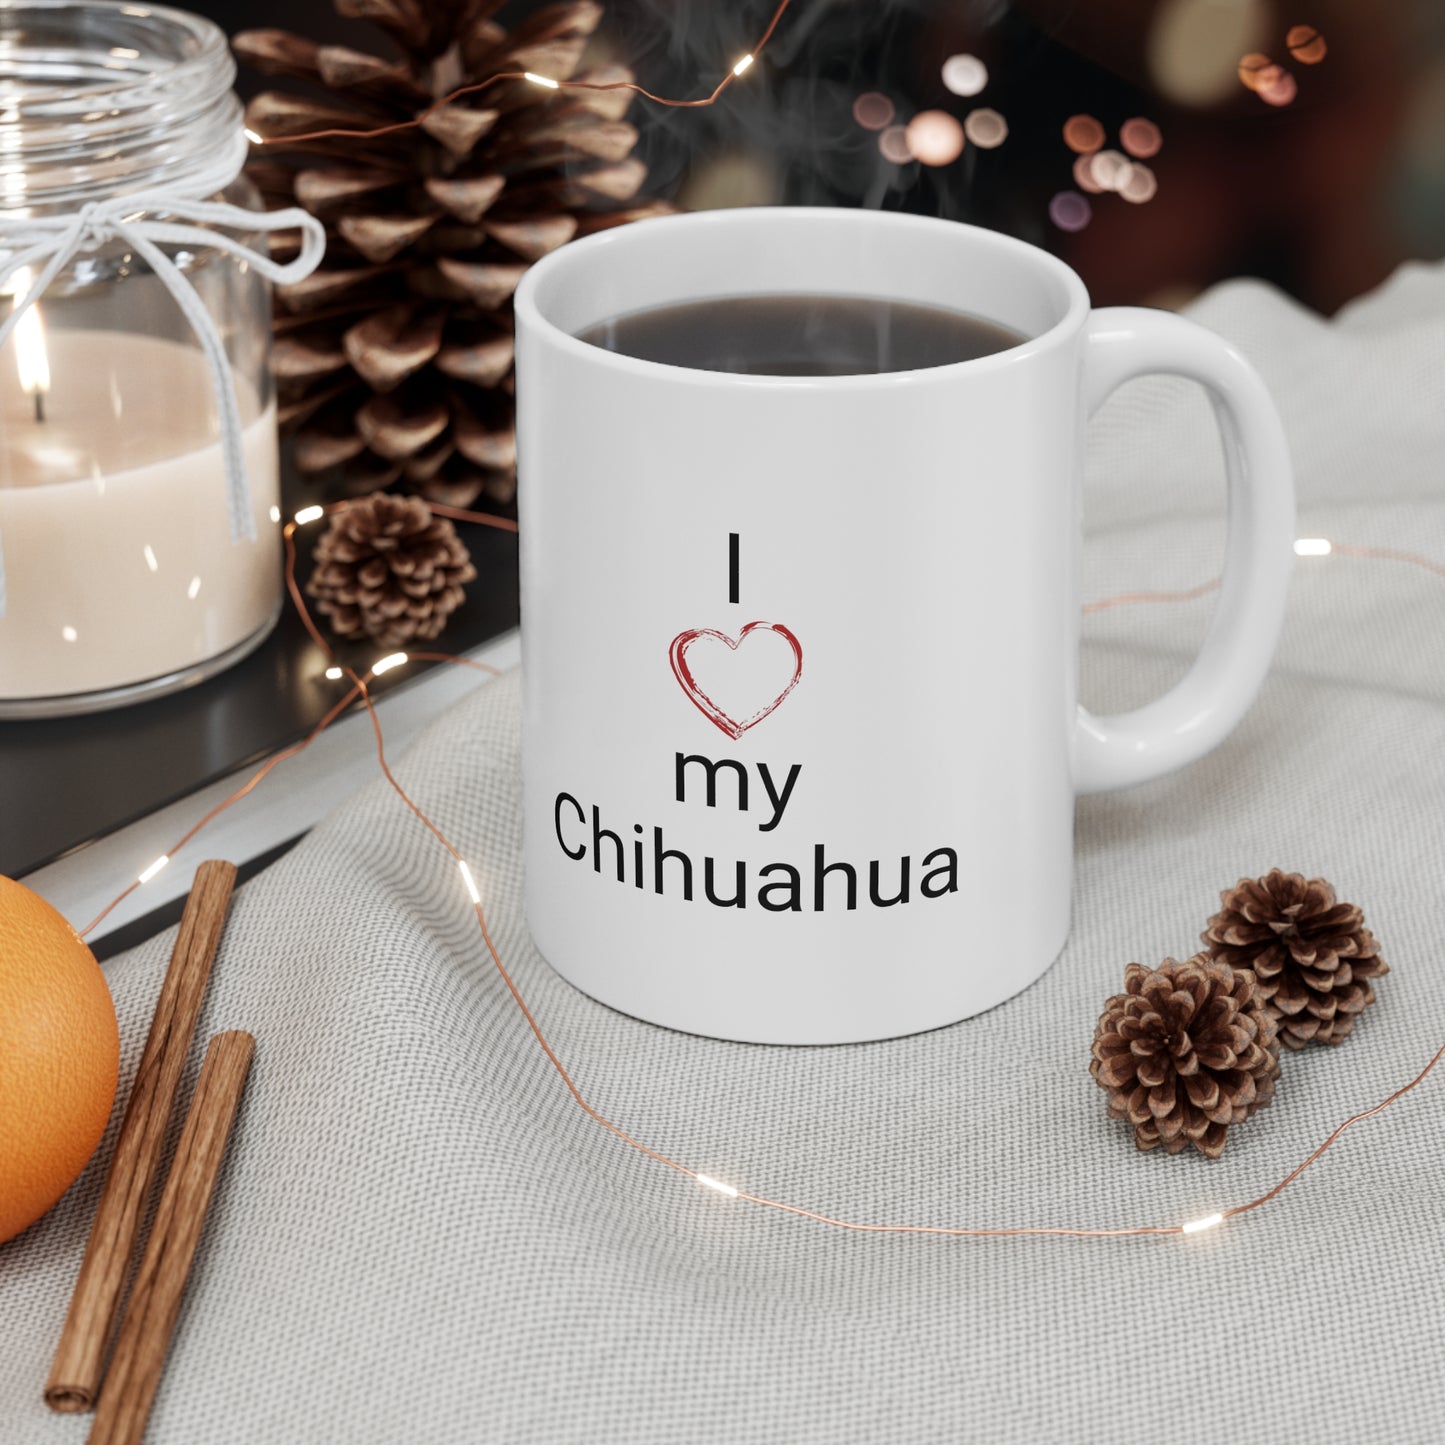 Chihuahua Love Ceramic Mug 11oz